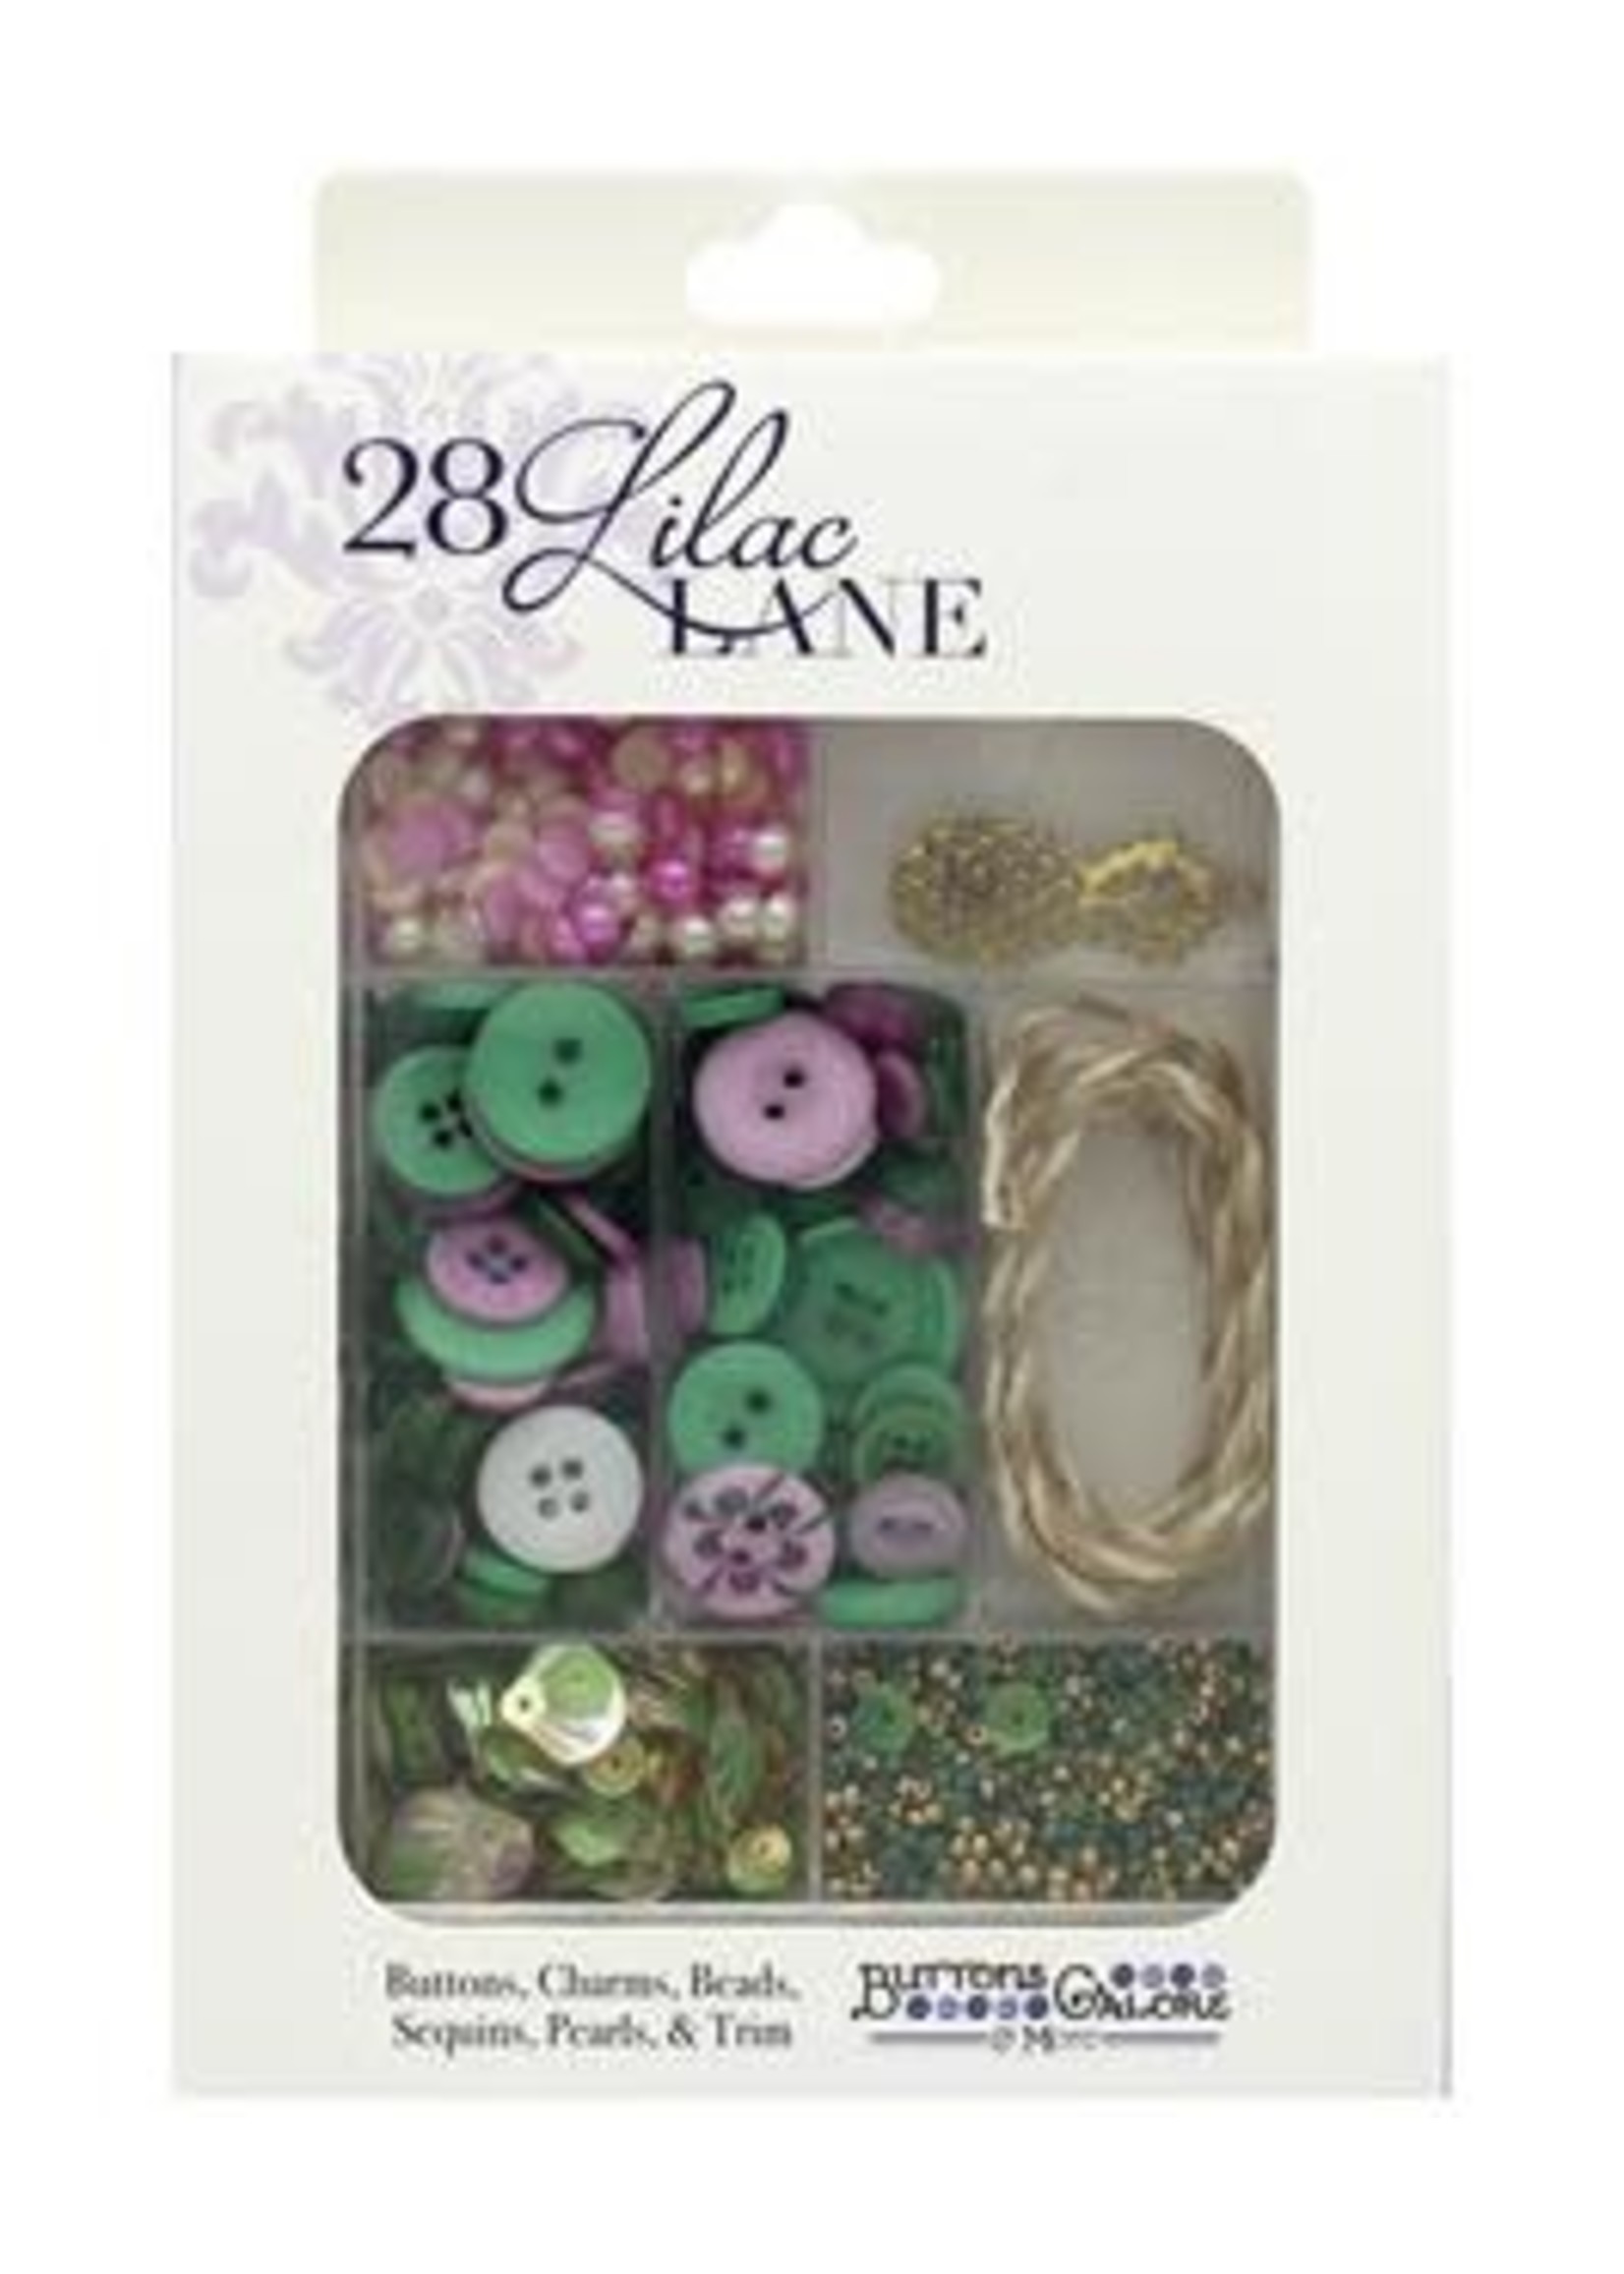 Buttons Galore 28 Lilac Lane Embellishment Kit Aloha